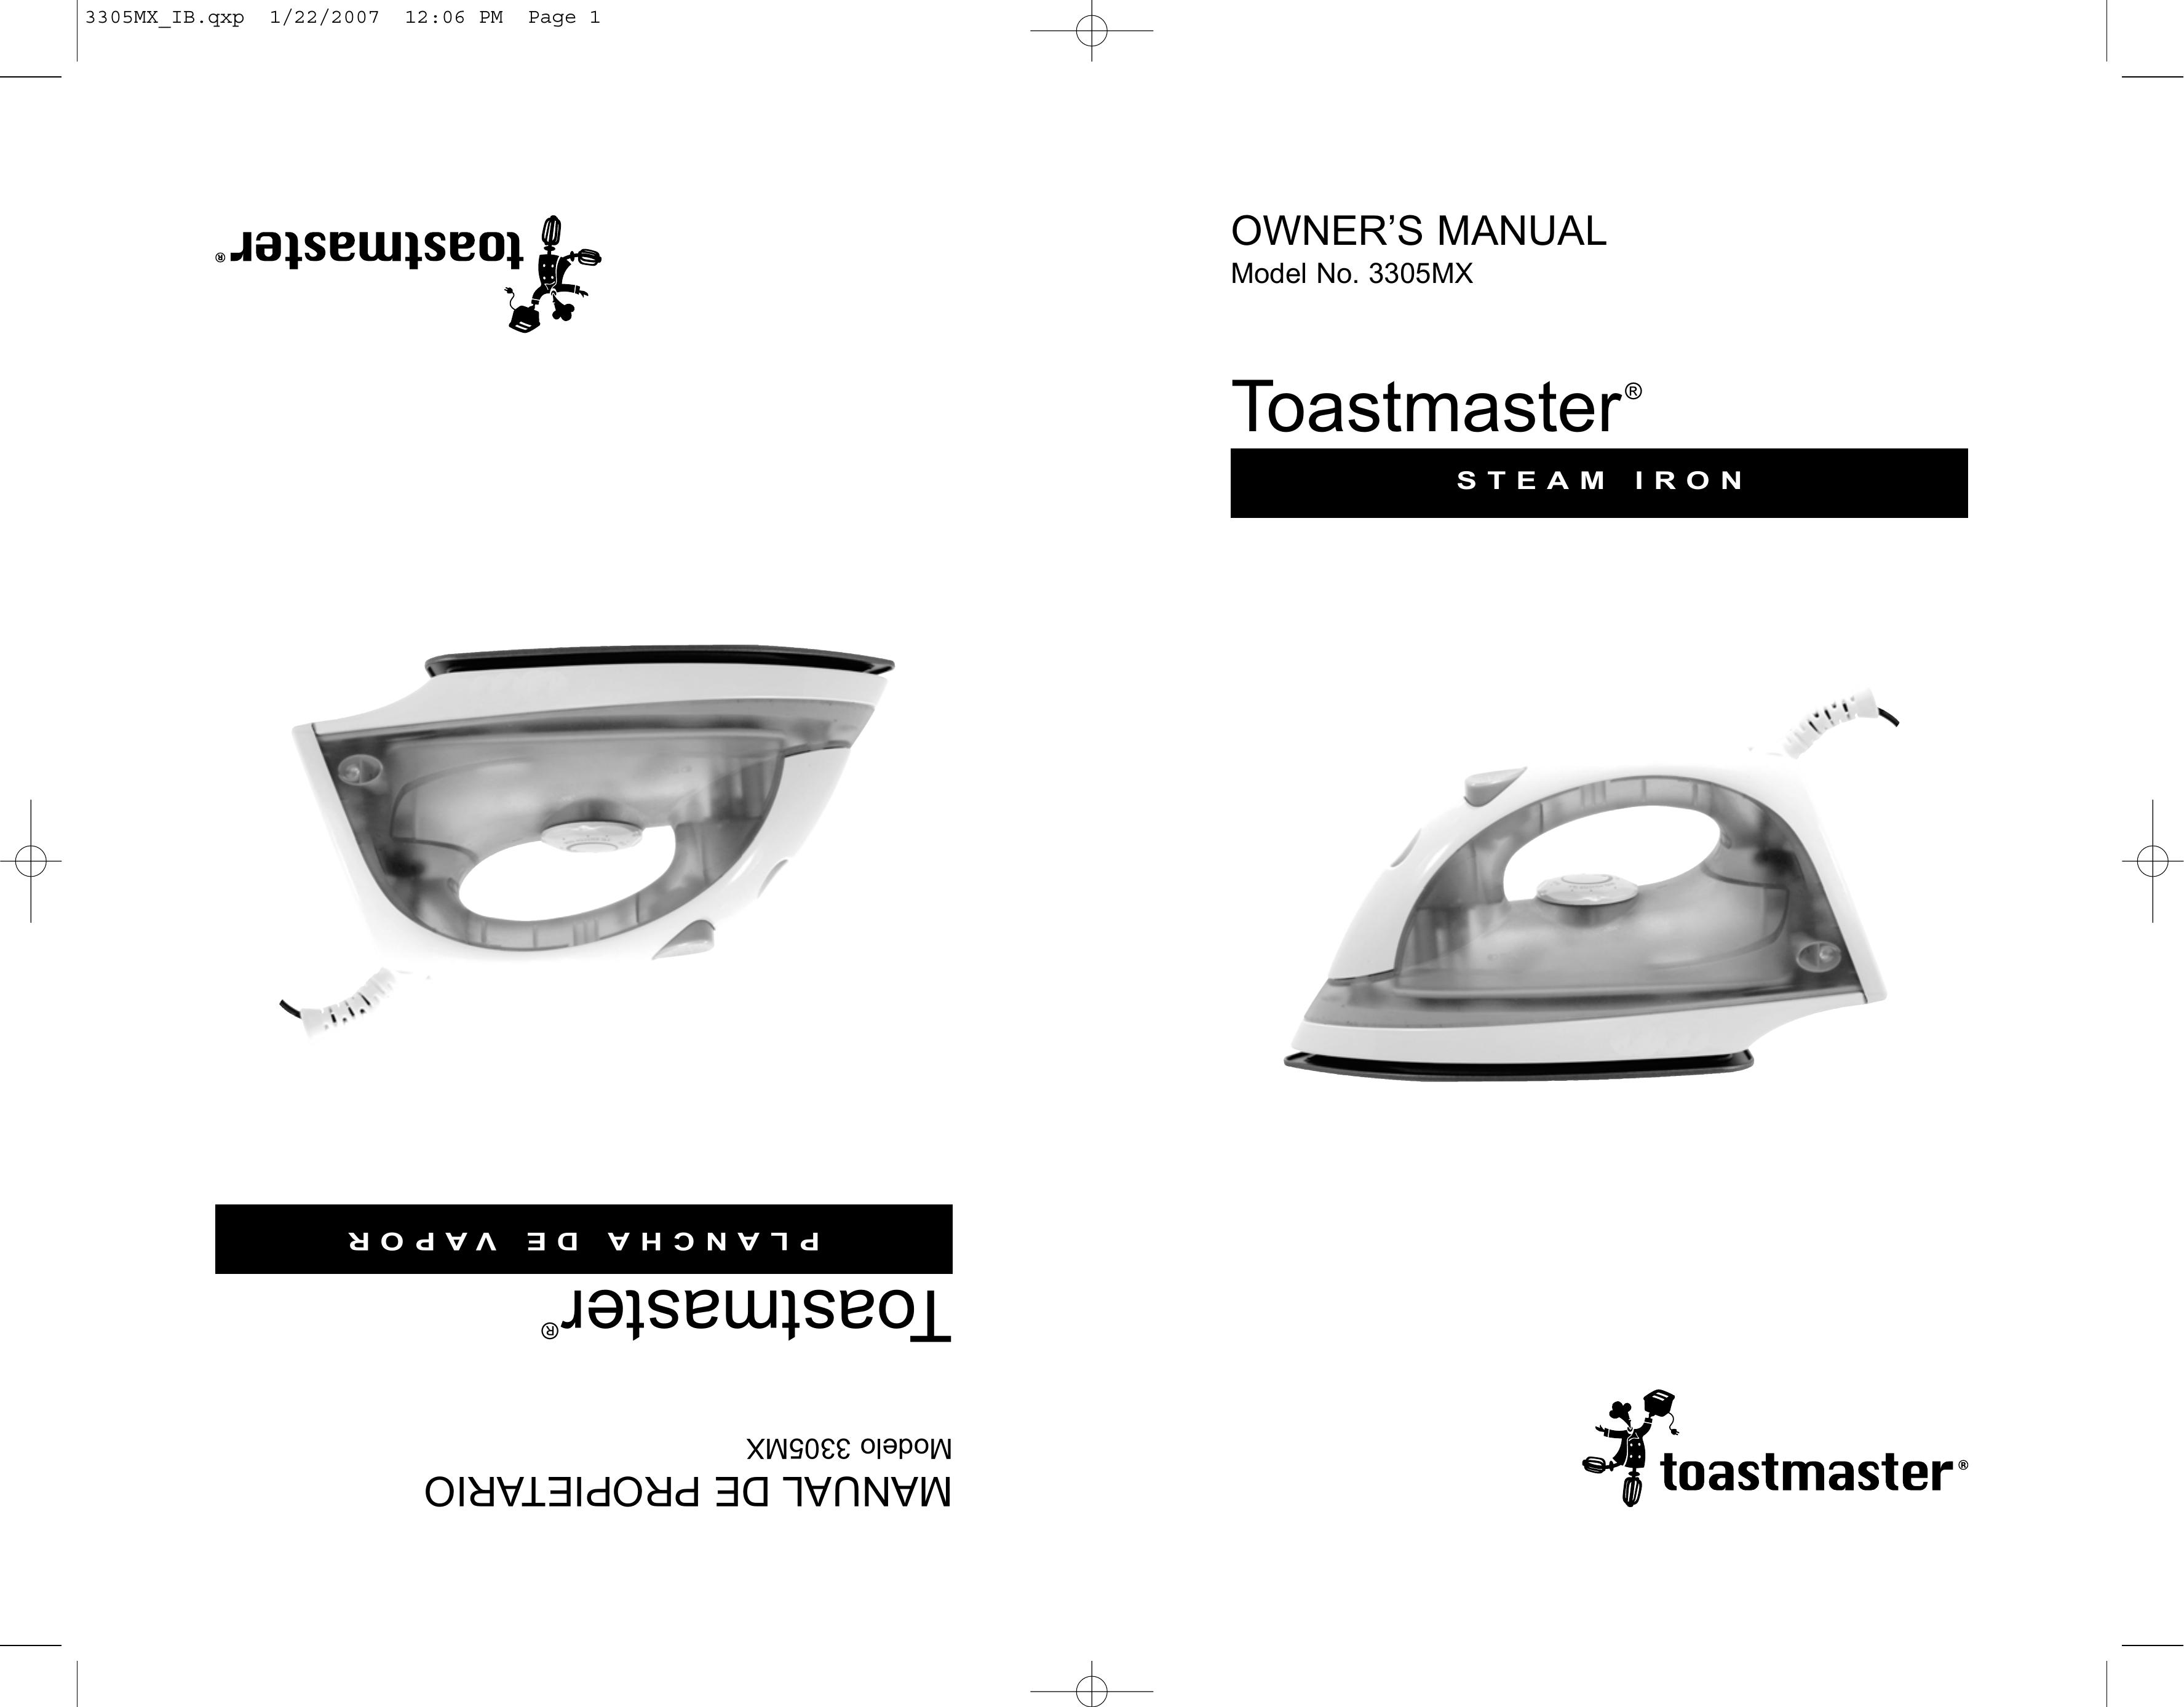 Toastmaster 3305MX Iron User Manual